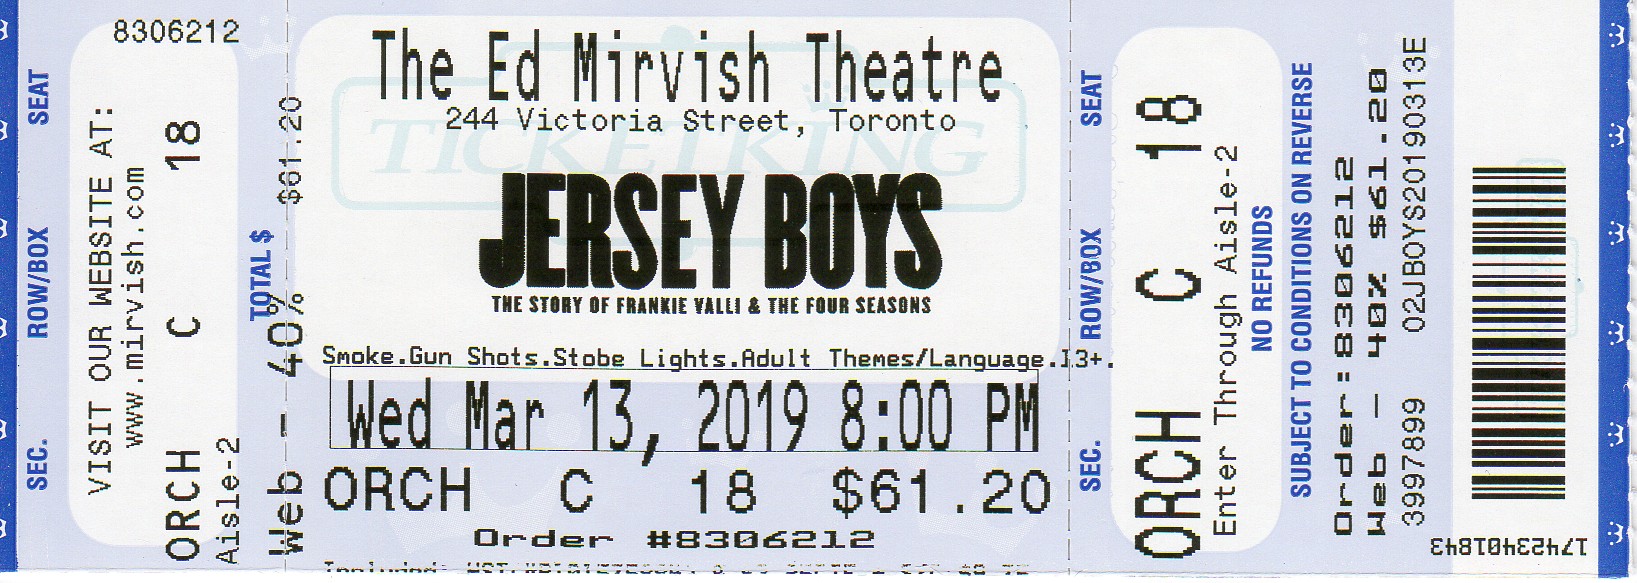 jersey boys theatre tickets